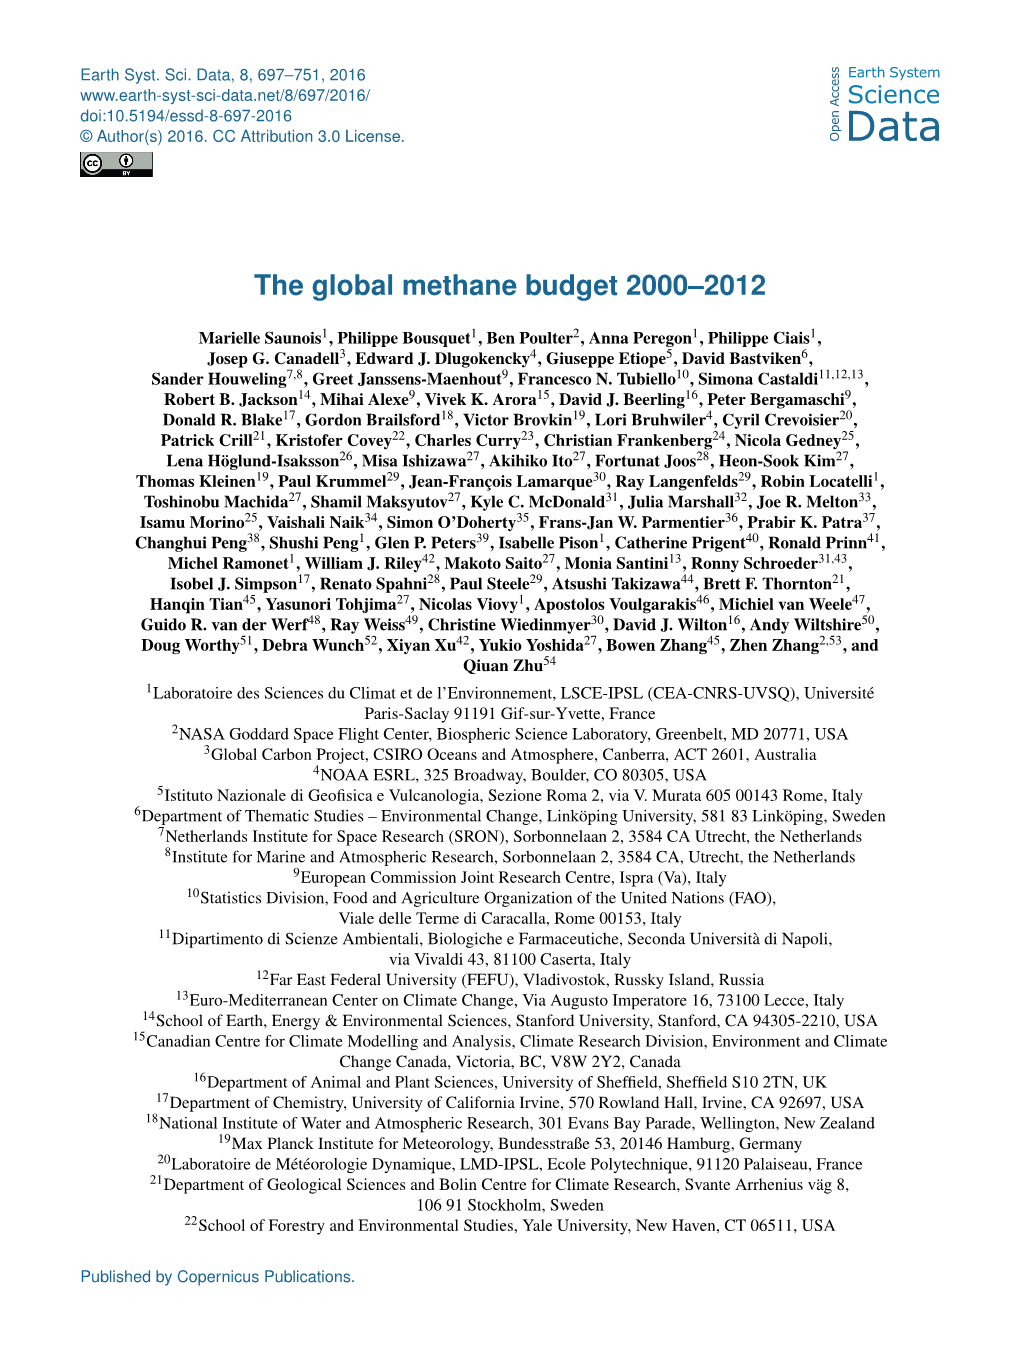 The Global Methane Budget 2000–2012